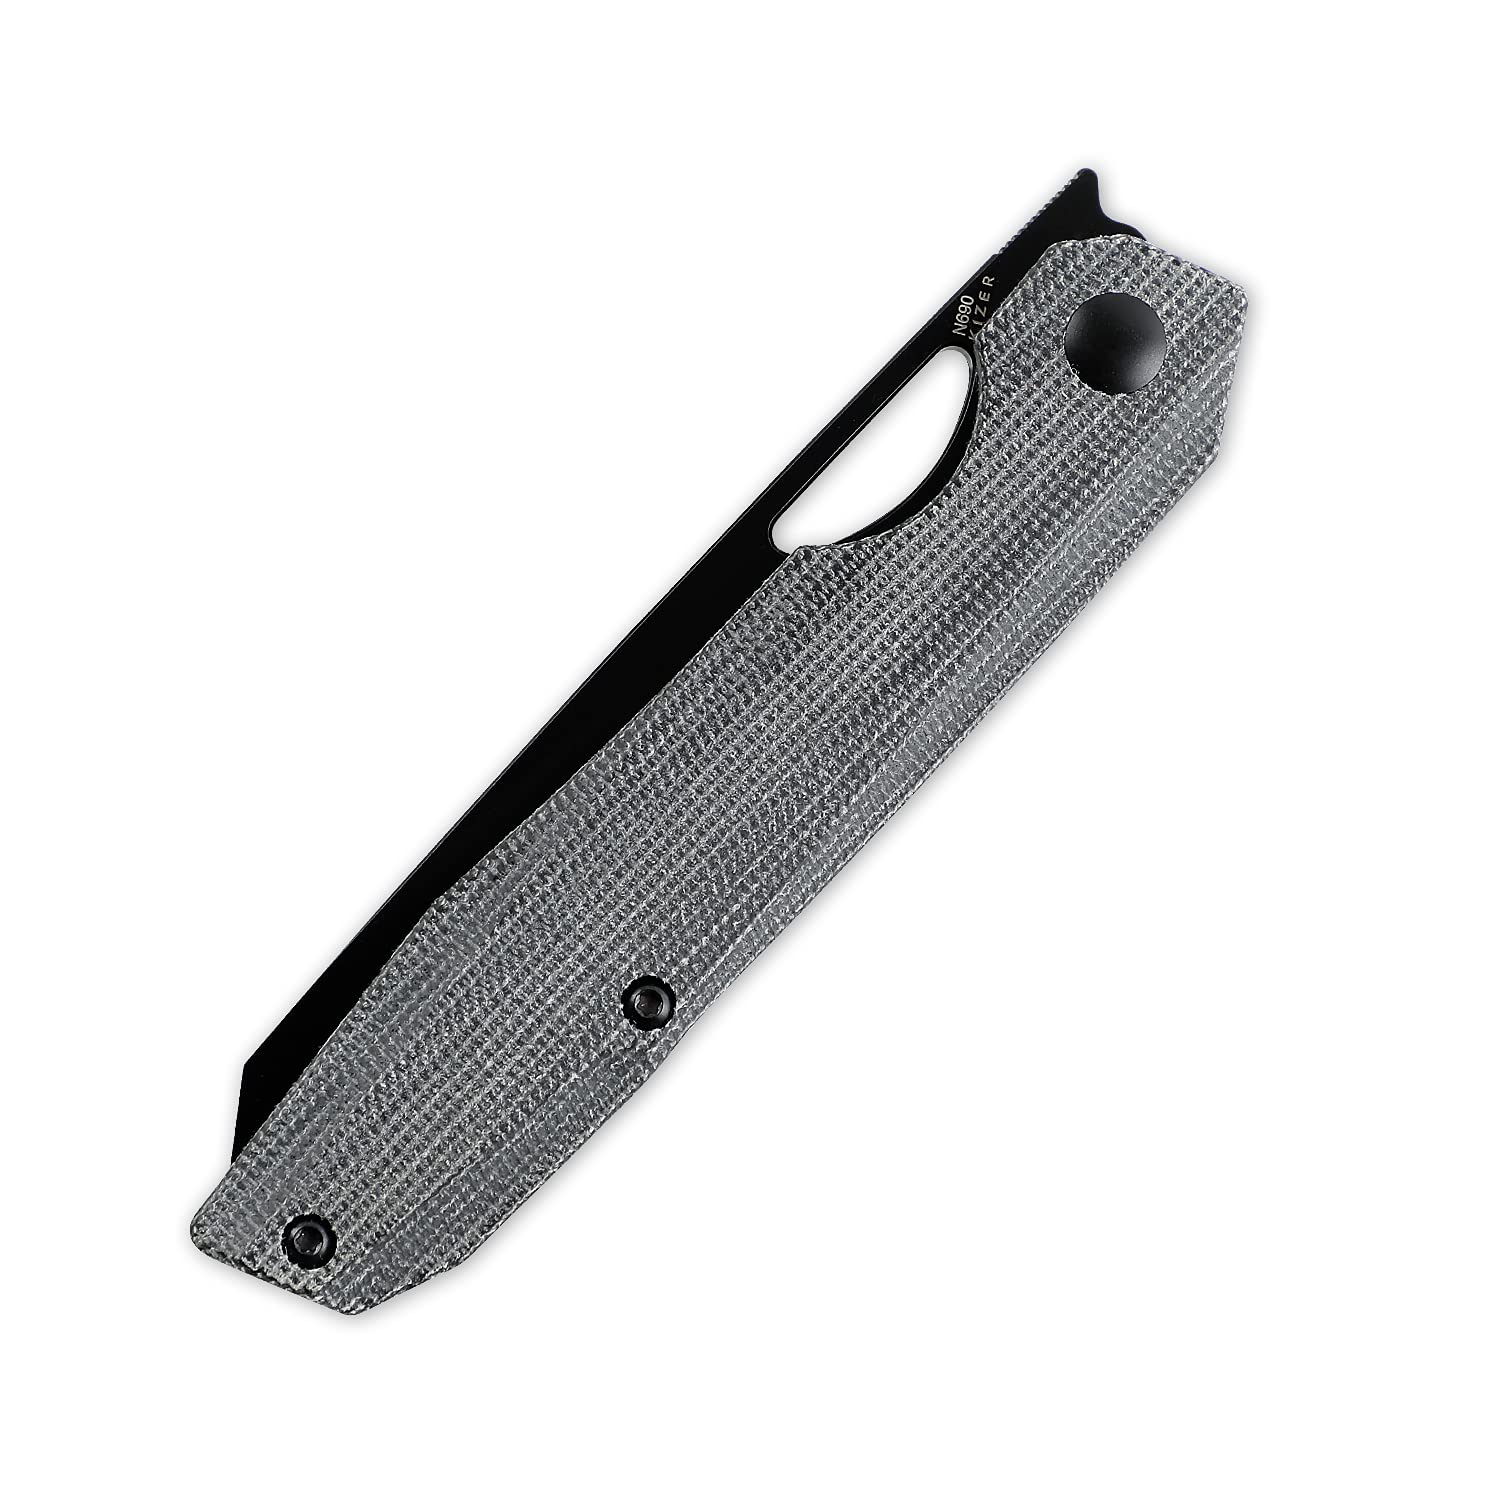 Kizer Genie EDC Knife, Black N690 Steel Reverse Tanto Blade, Black Micarta Folding Knife, V4545E1